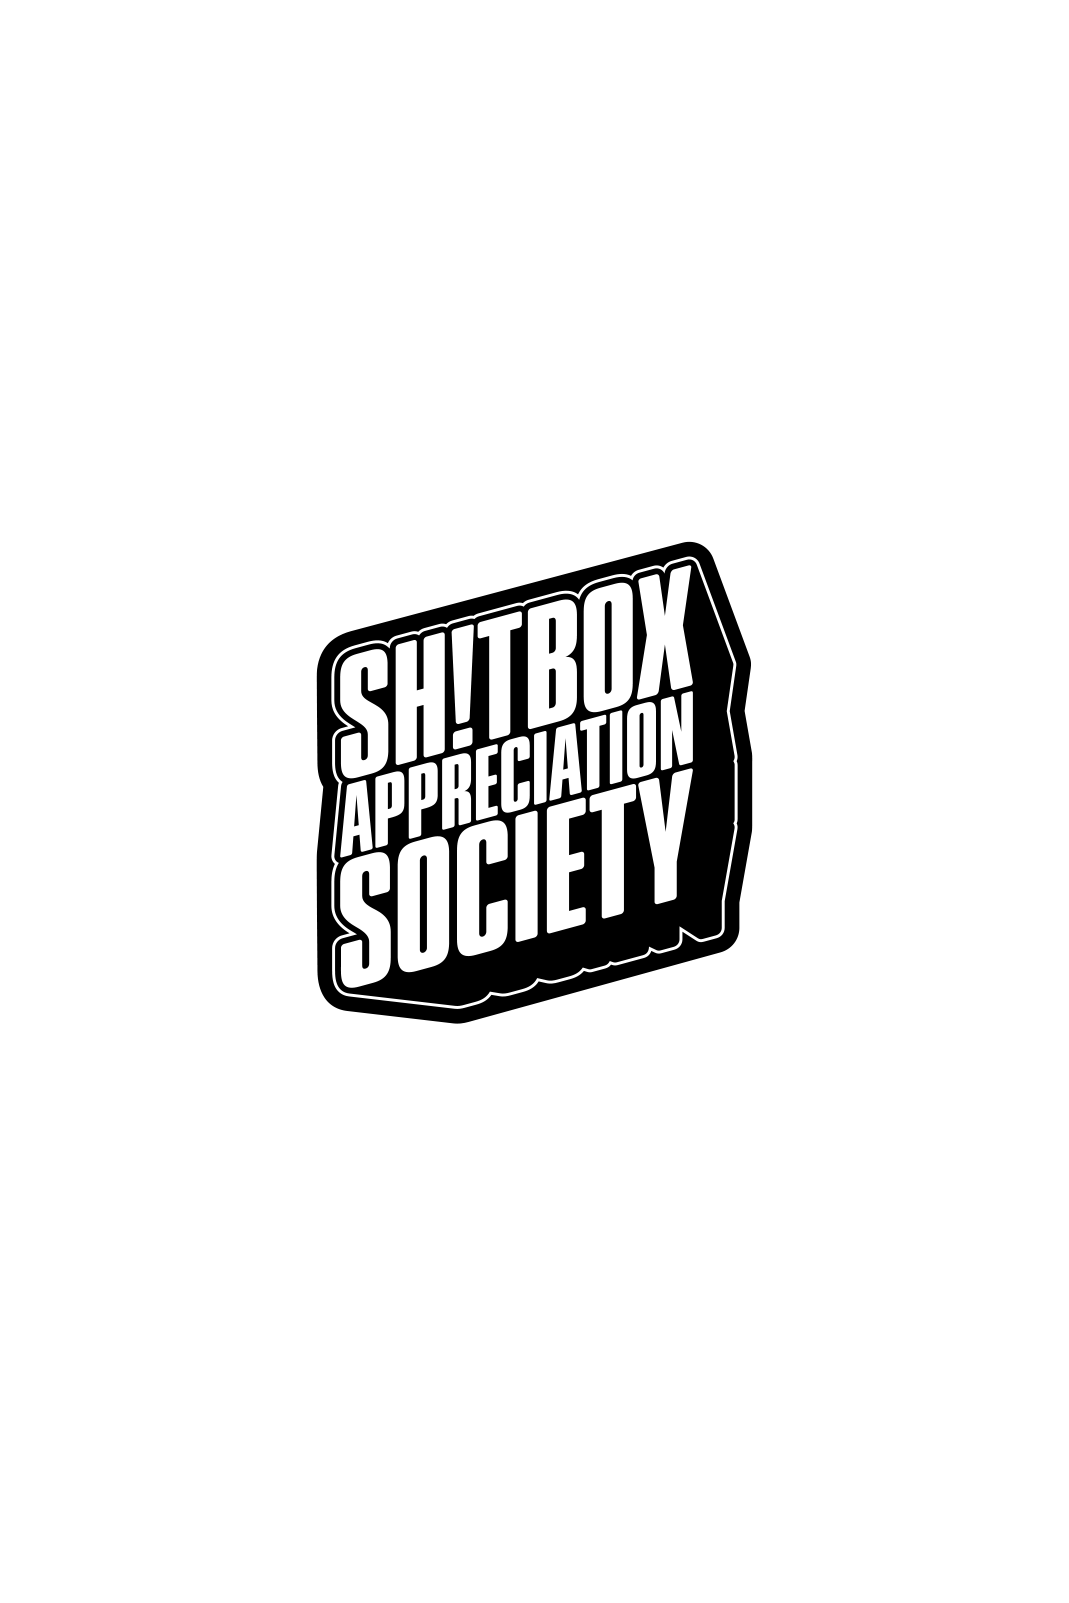 SHITBOX APPRECIATION SOCIETY ! STICKER